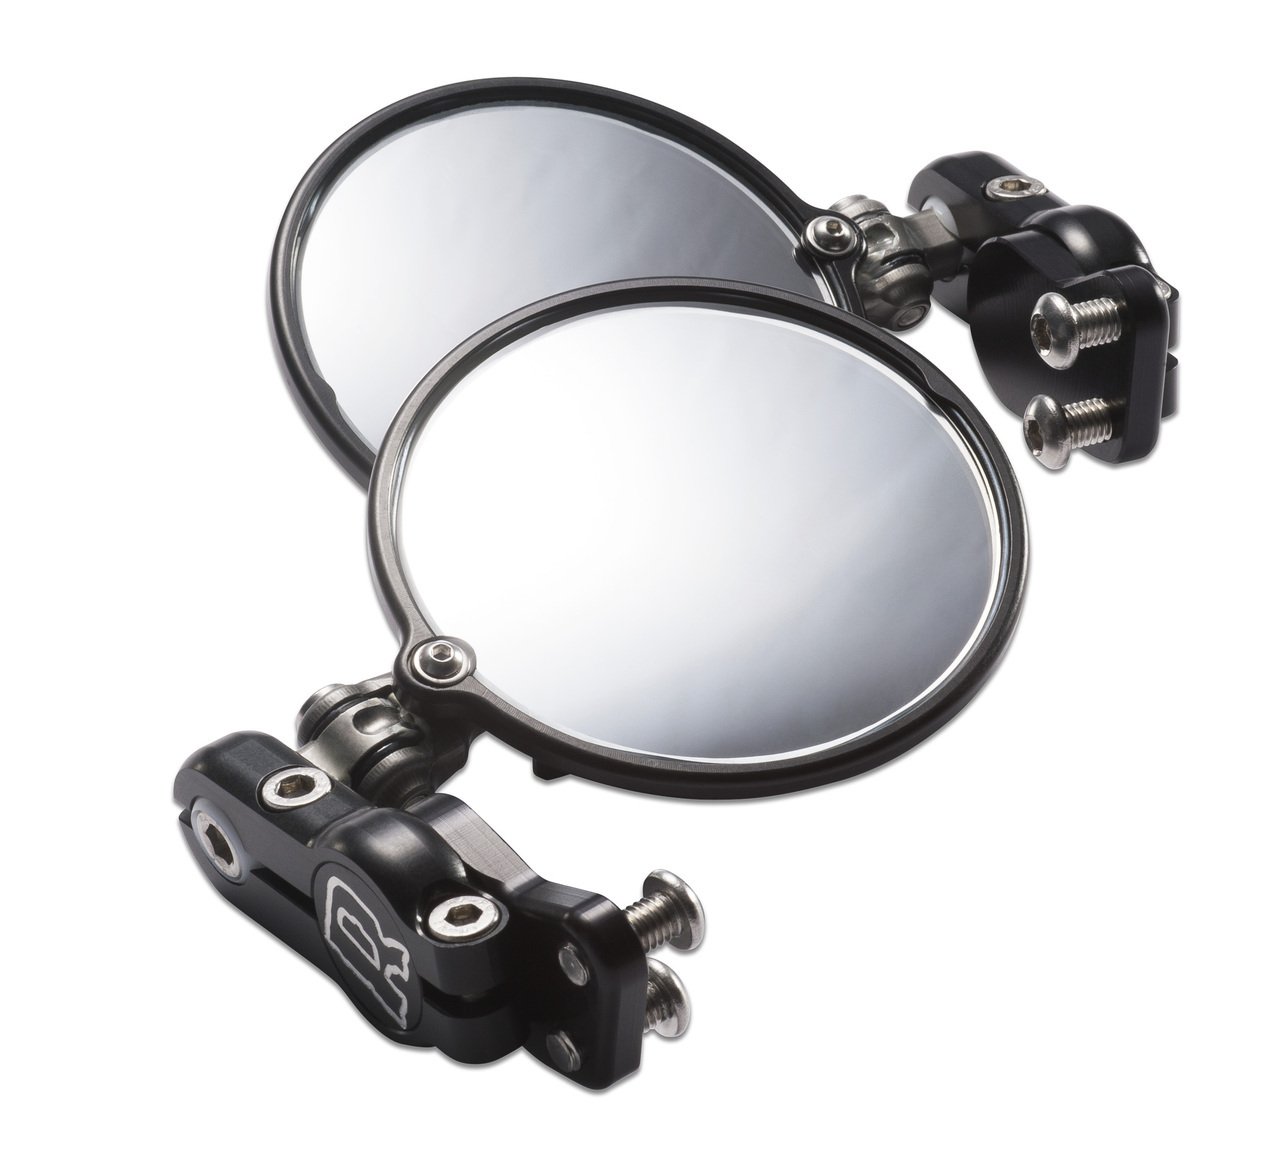 Main image of Rottweiler Hindsight QF Mirror Kit